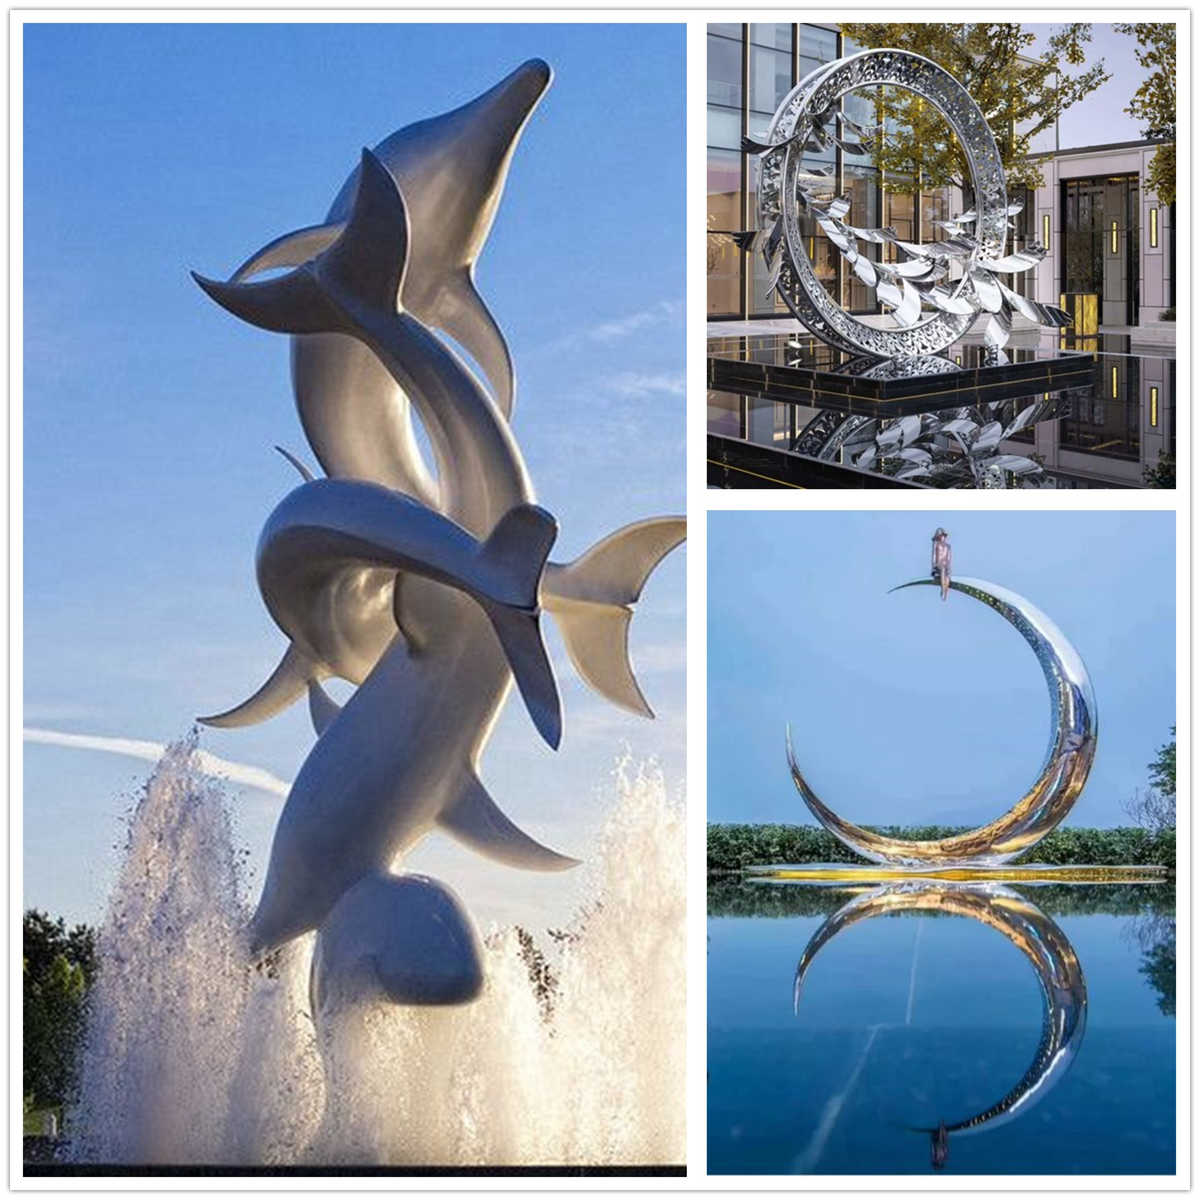 2.Decorative Metal Waterscape Sculptures